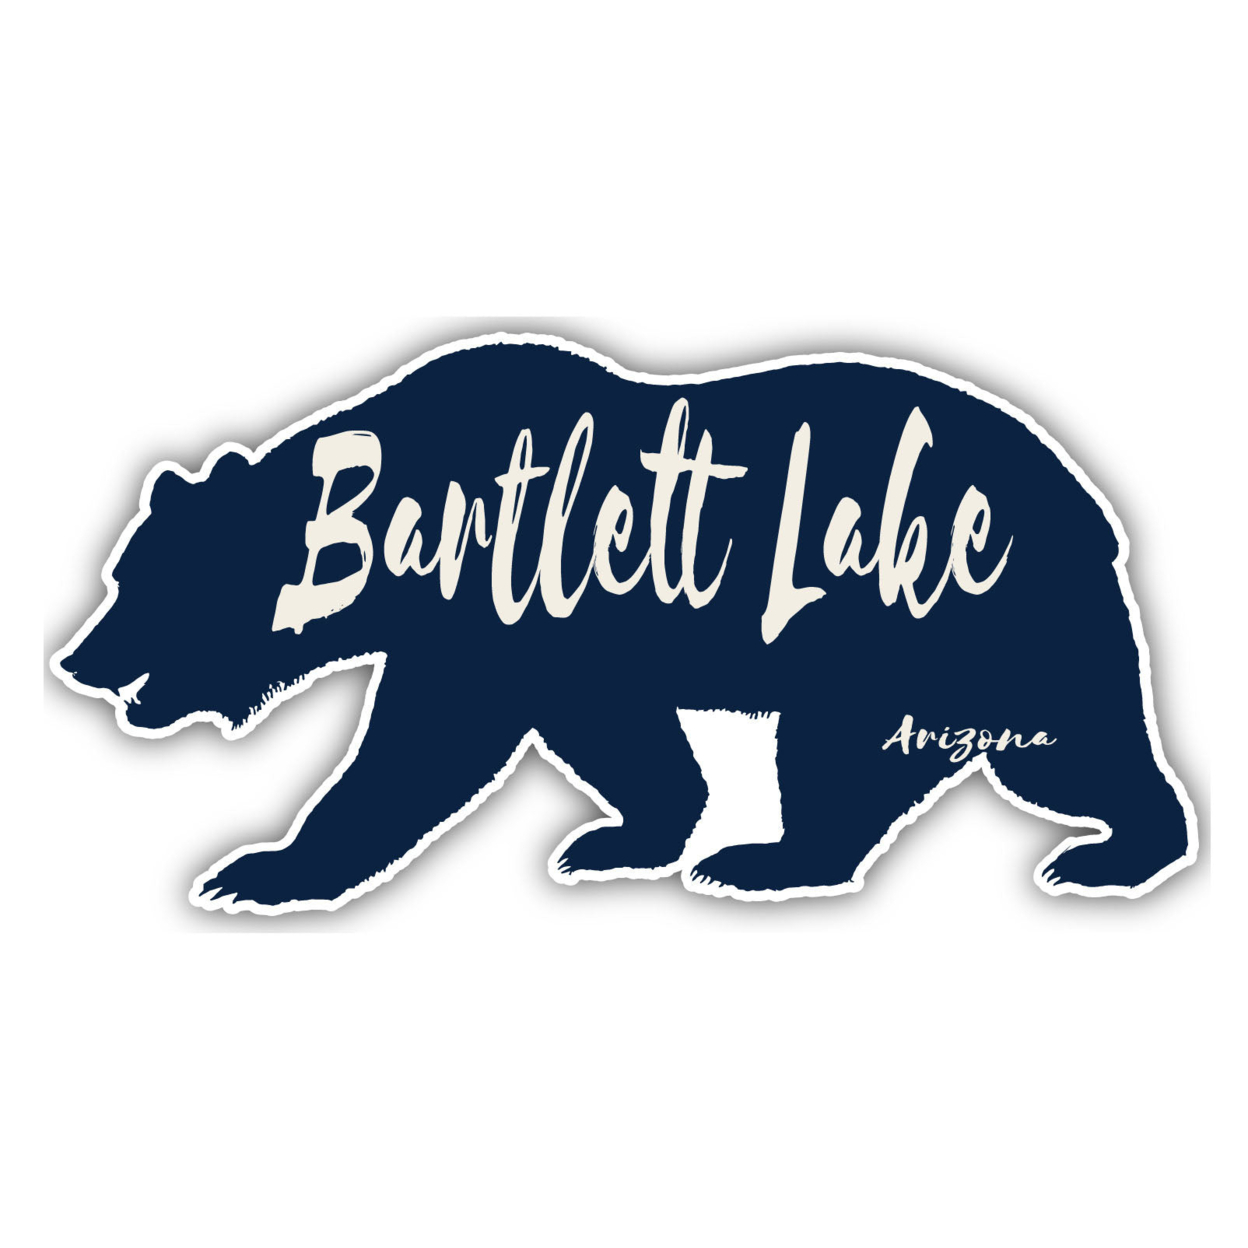 Bartlett Lake Arizona Souvenir Decorative Stickers (Choose Theme And Size) - 4-Pack, 2-Inch, Tent